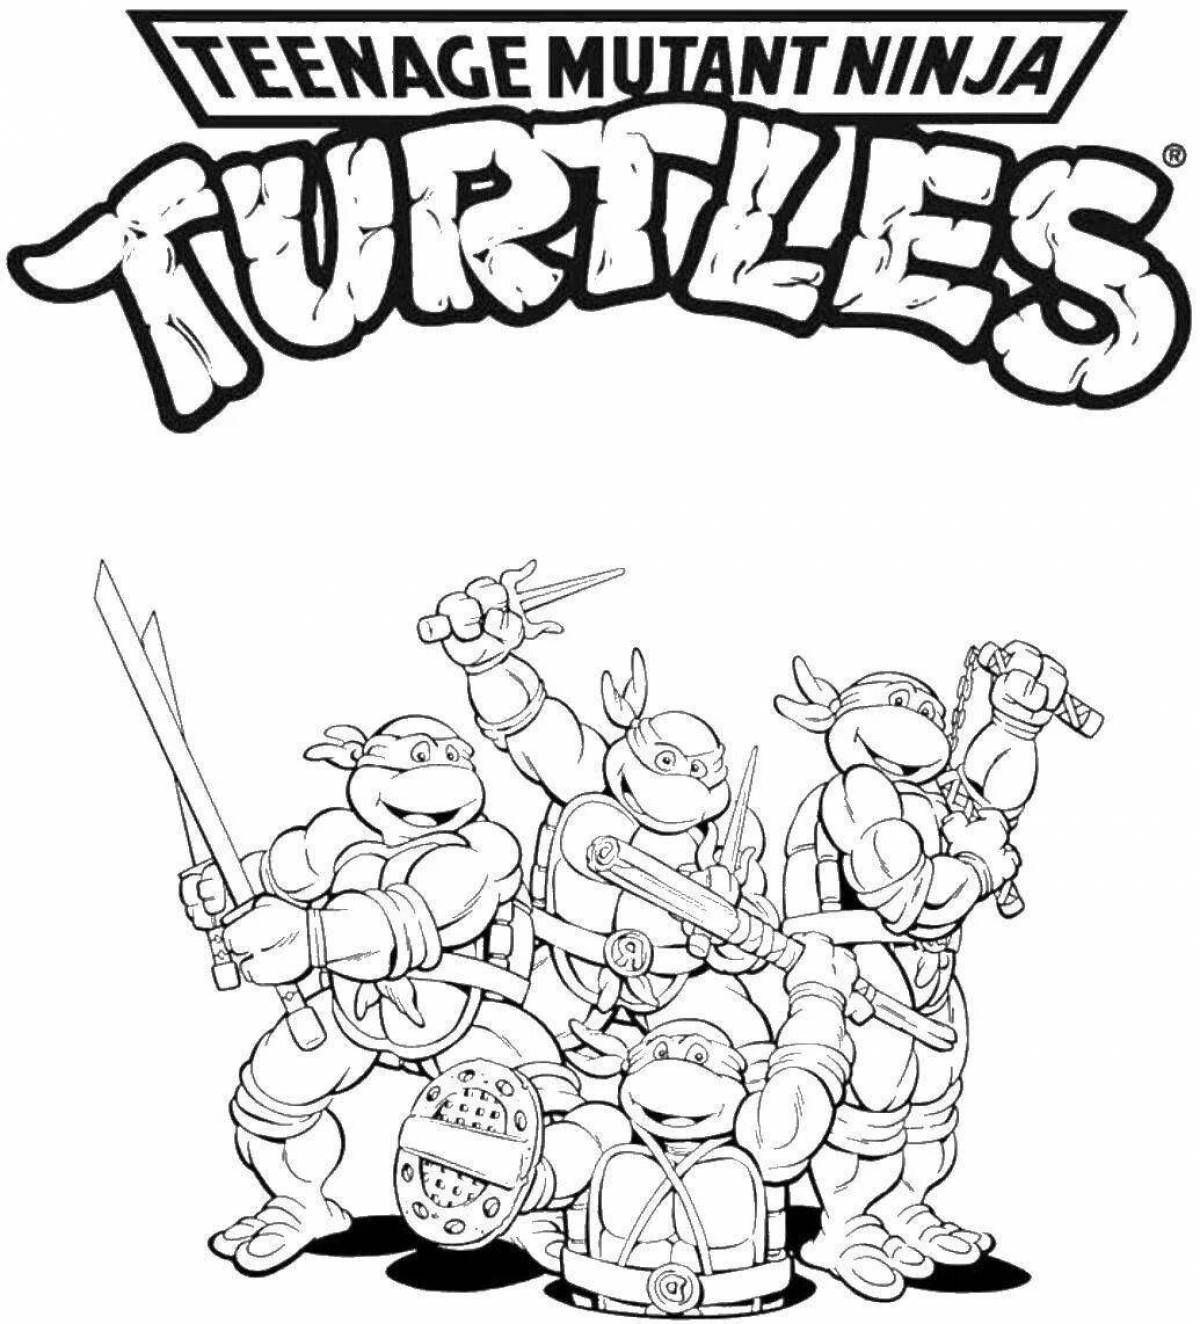 Lego ninja turtles coloring page